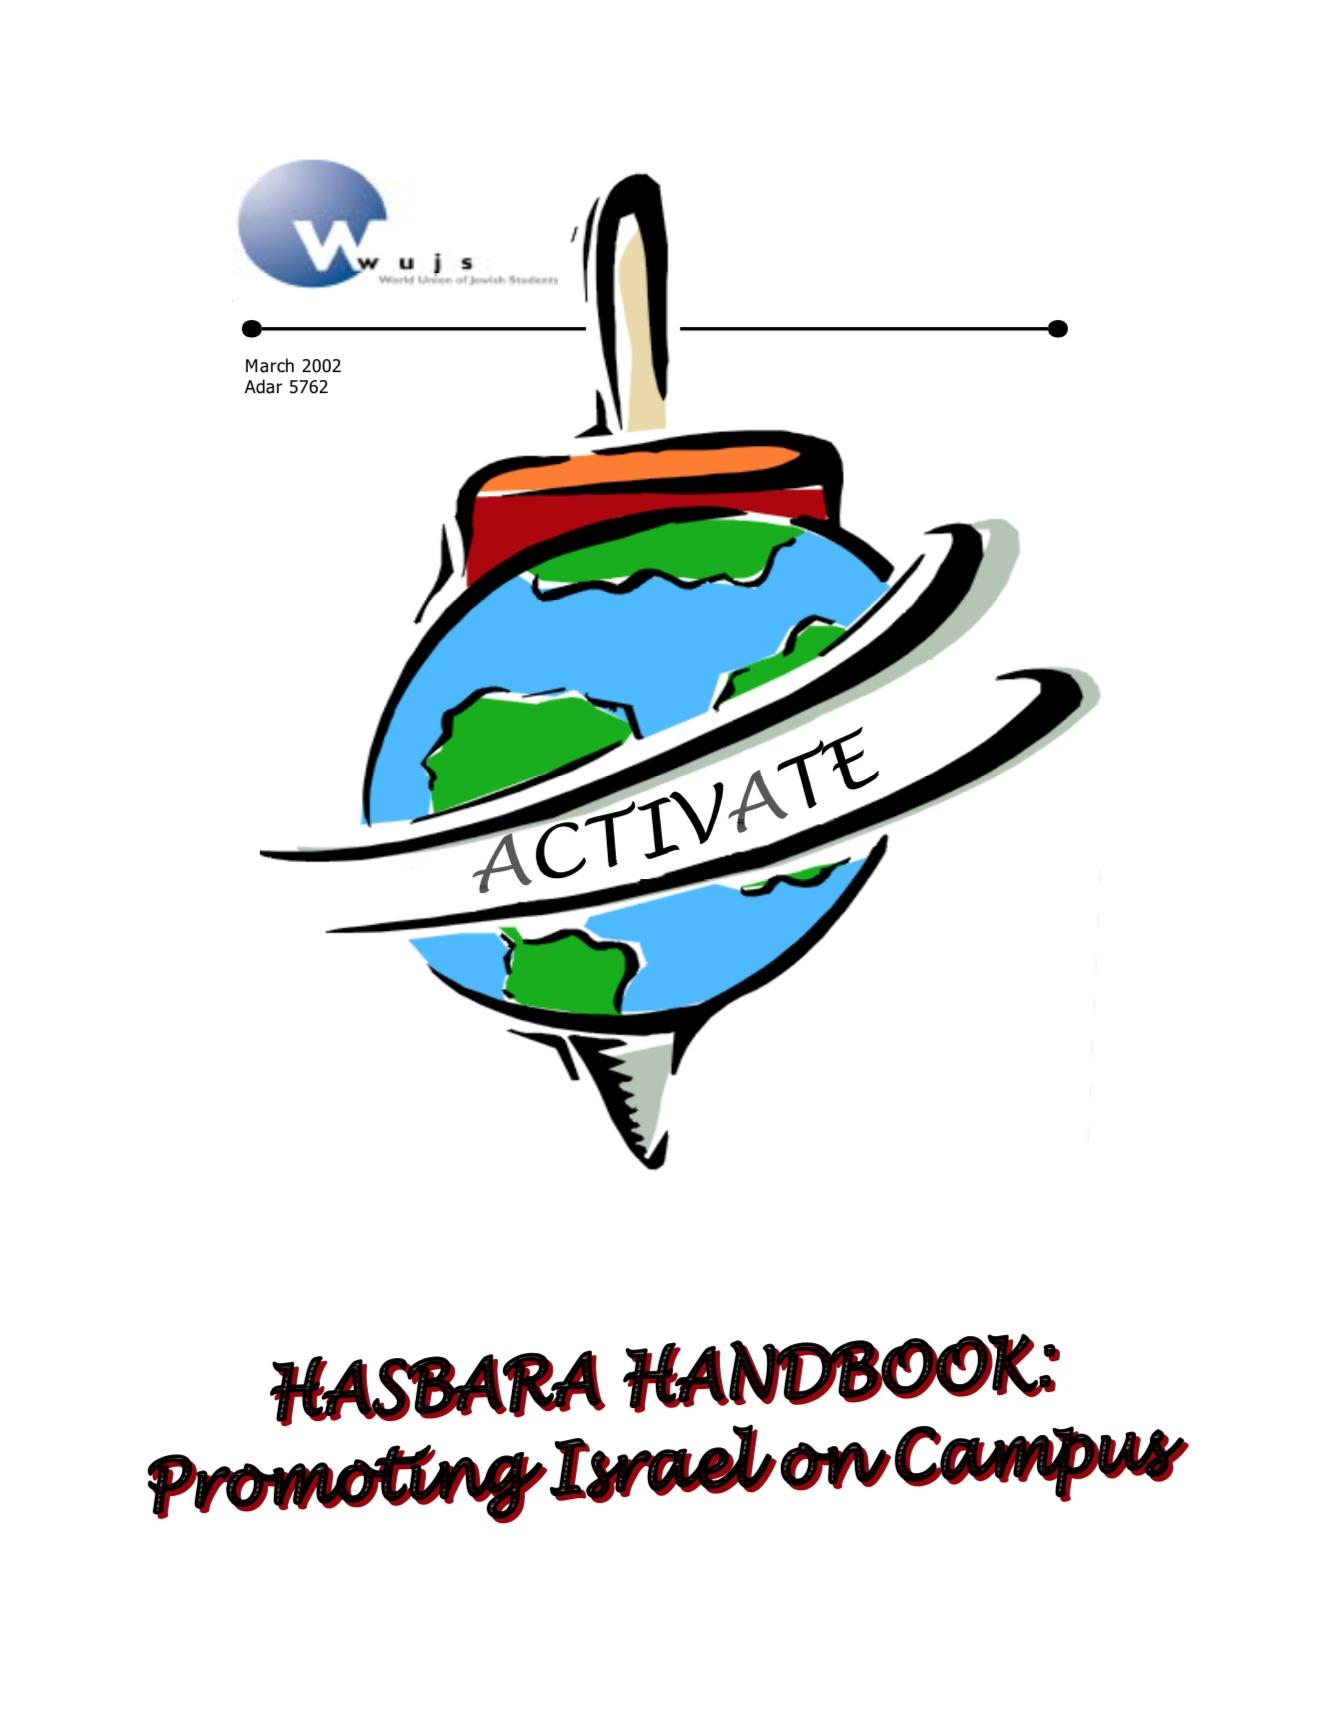 The Hasbara Handbook (2002) by The International Jews for Israel